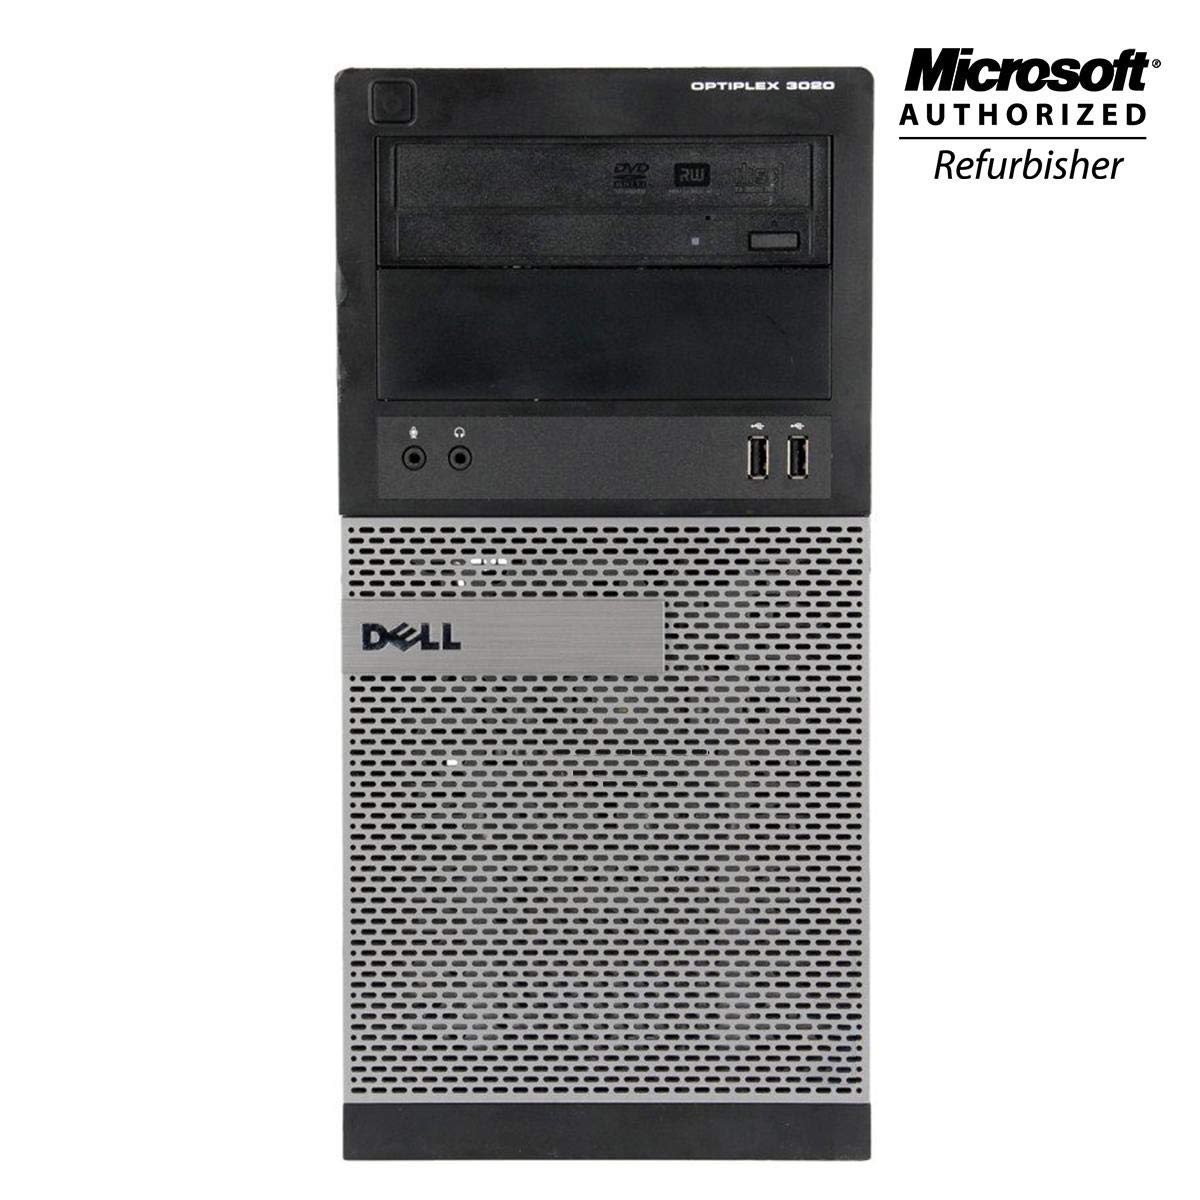 Dell Optiplex 3020 Tower Gaming Desktop Computer - Quad Core i7 4th Gen 3.4 GHz, 8GB RAM, 256GB SSD, NVIDIA GT 1030 2GB DDR5, Keyboard, Mouse, WiFi Adapter, Windows 10 Professional (Renewed)